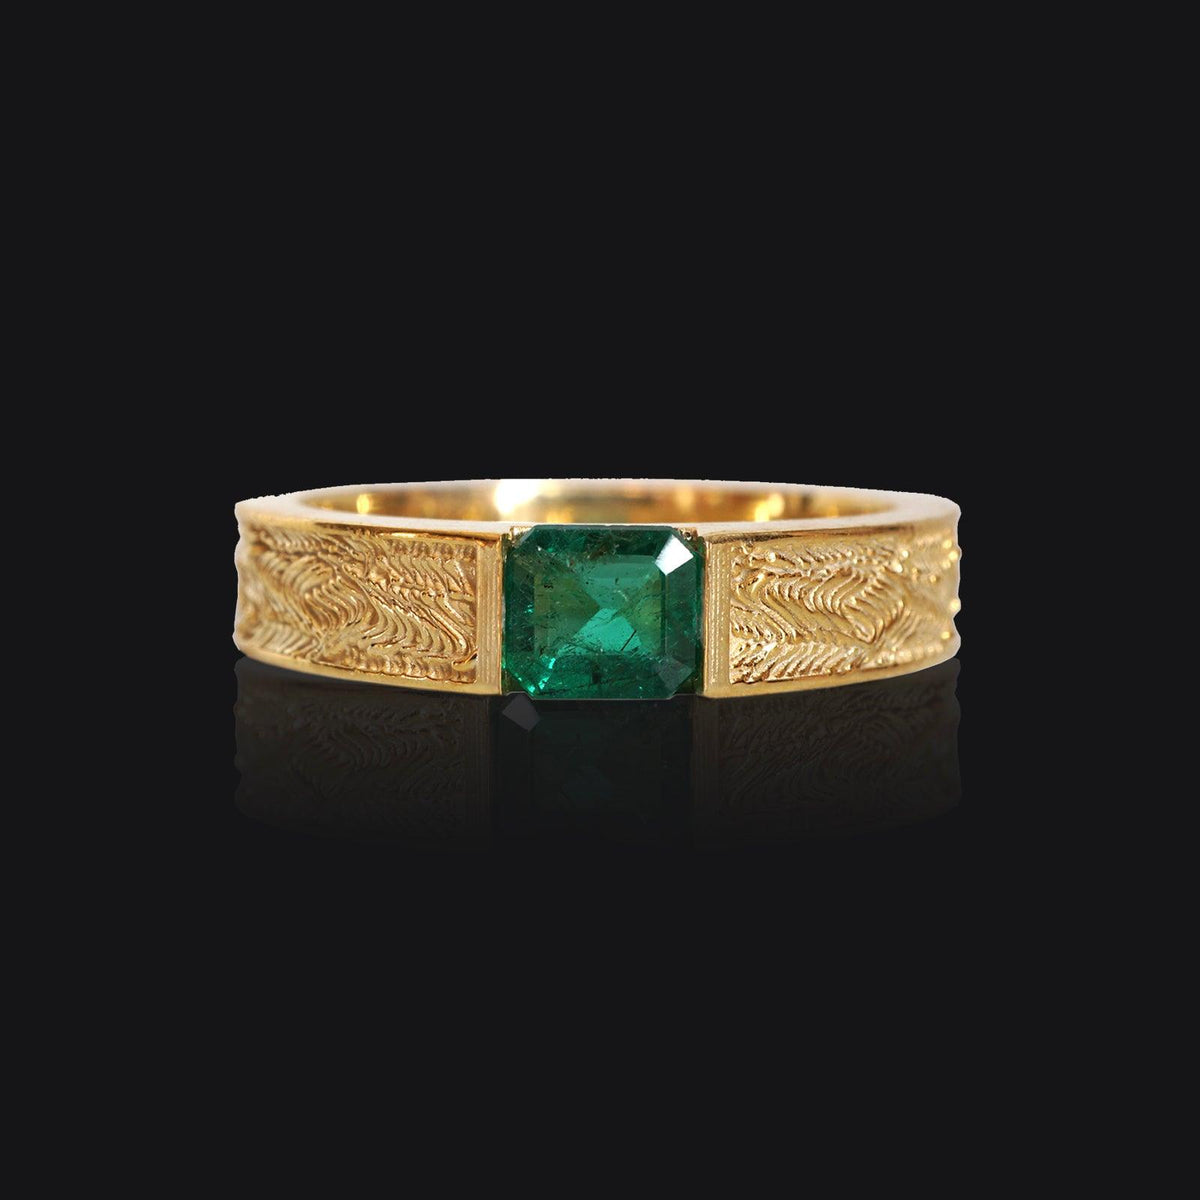 Emerald Dragon Ring in 14K Gold, 5mm - Tippy Taste Jewelry